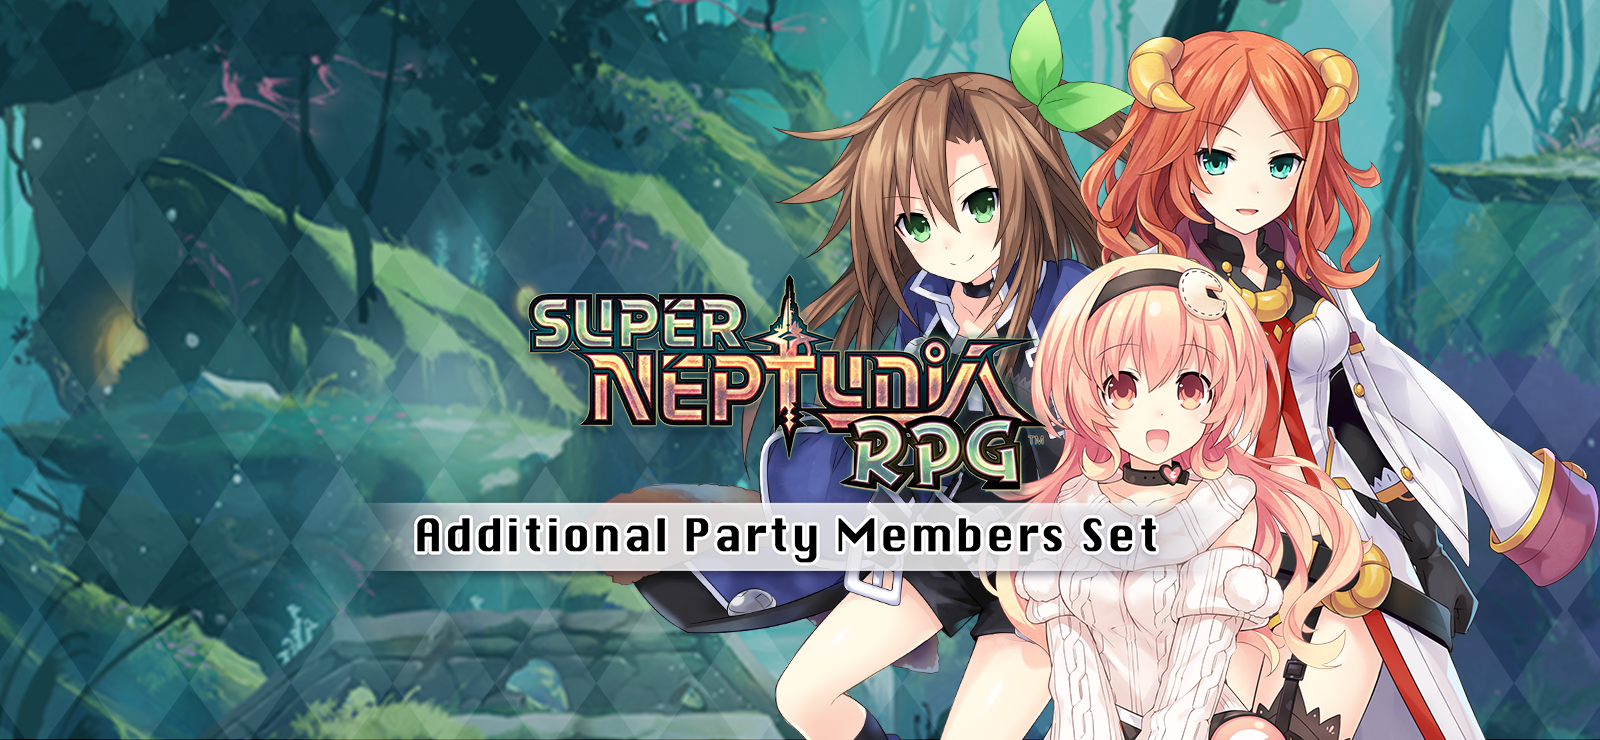 Super Neptunia RPG - Additional Party Members Set